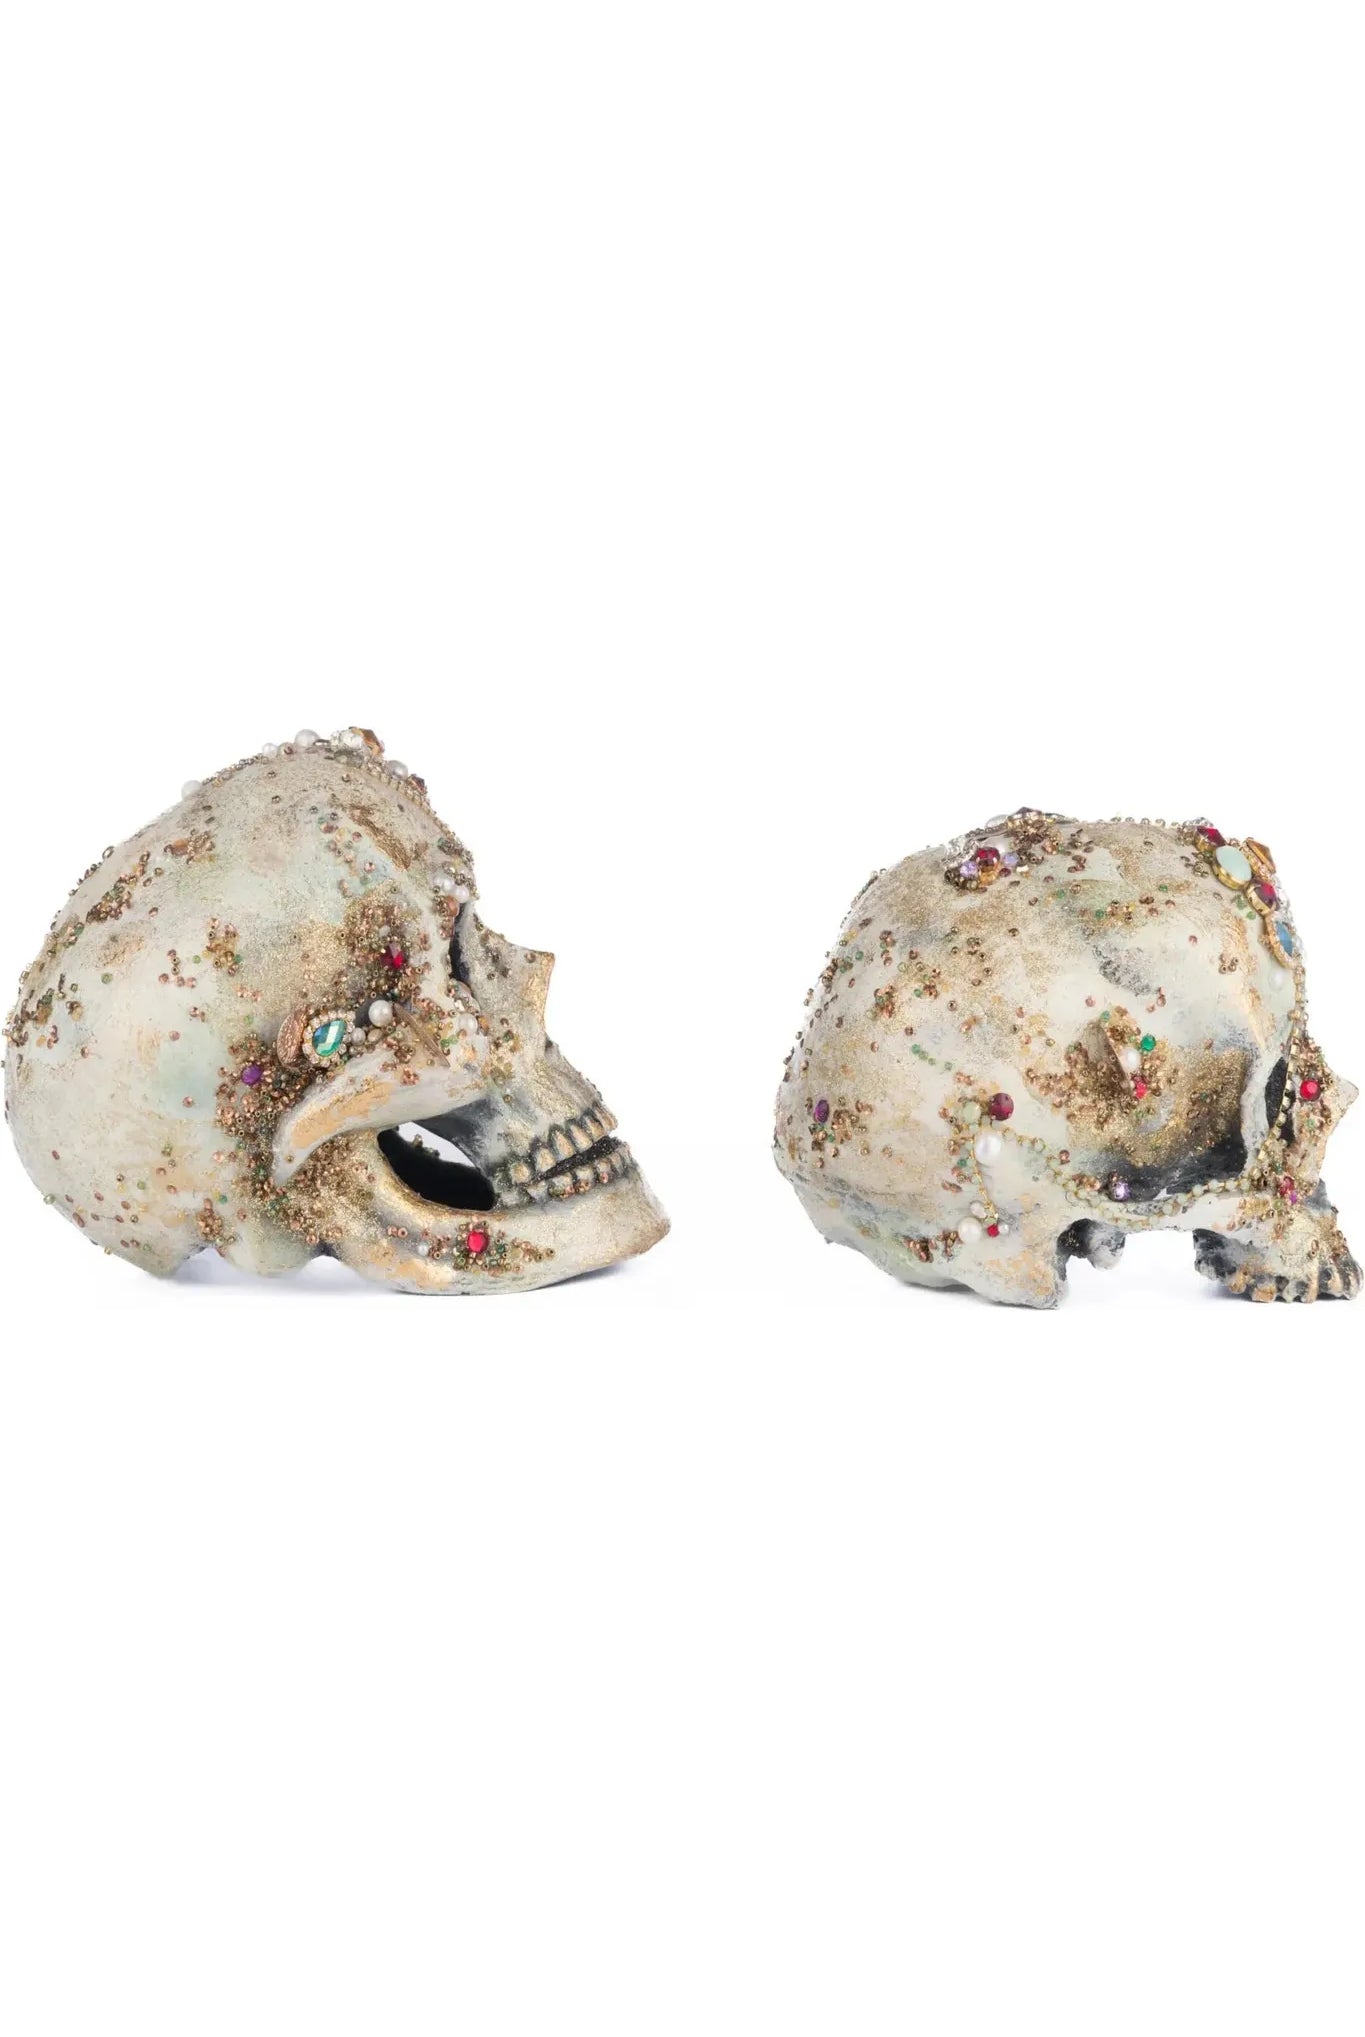 Shop For Tabletop Jewel Encrusted Skulls Assortment of 2 28-428214